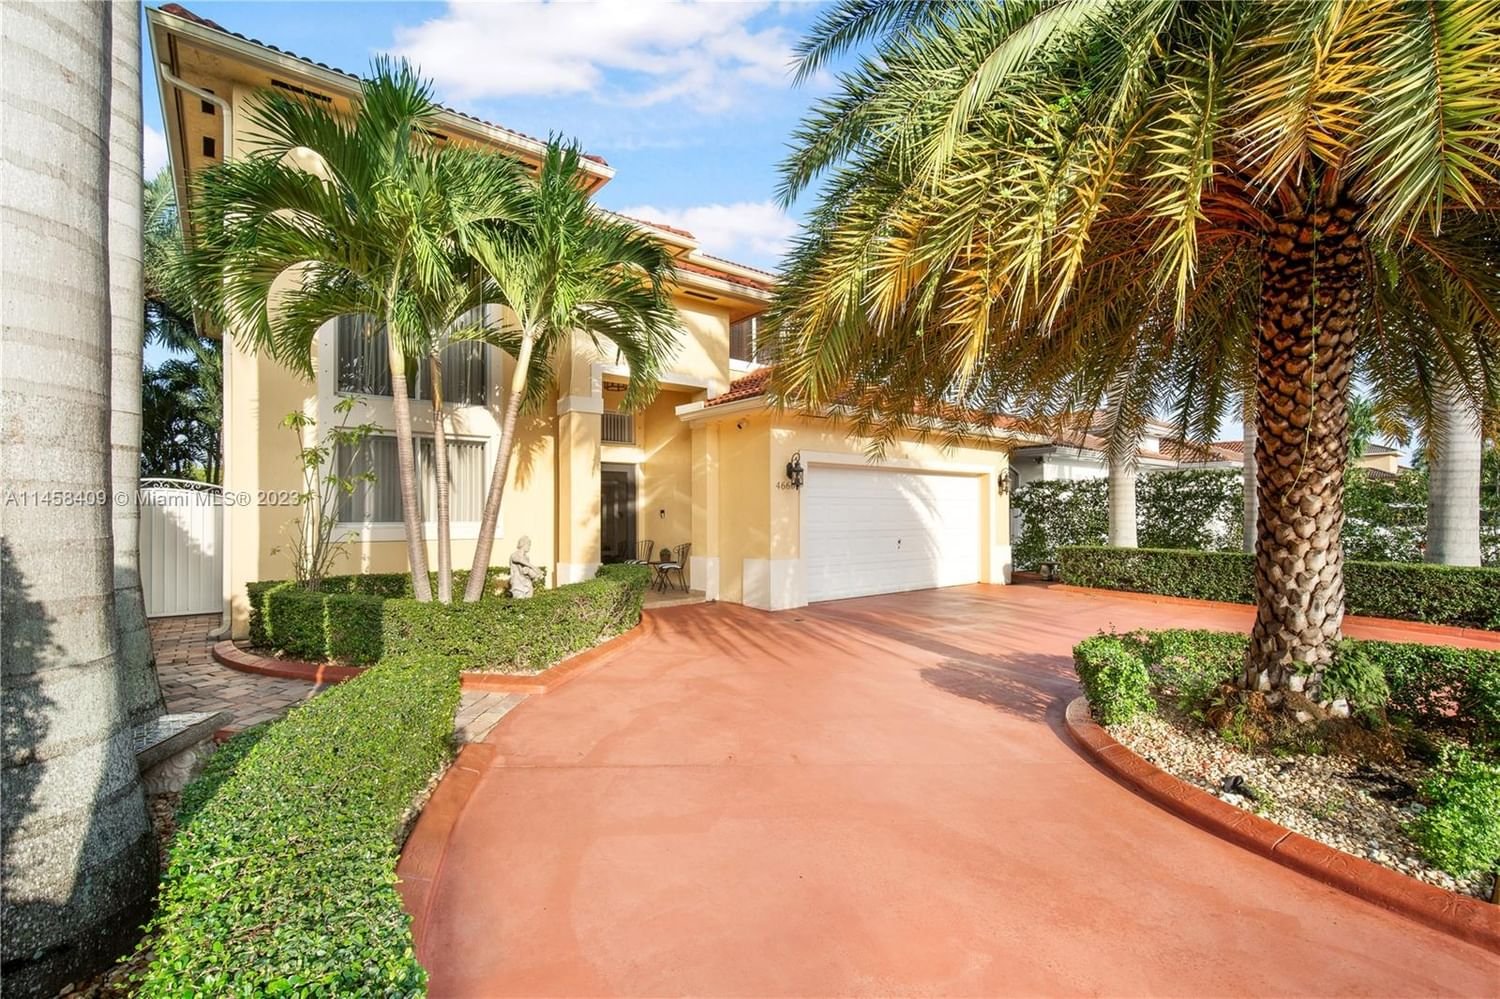 Real estate property located at 4666 164th Ct, Miami-Dade County, WOODLAND ESTATES SO, Miami, FL